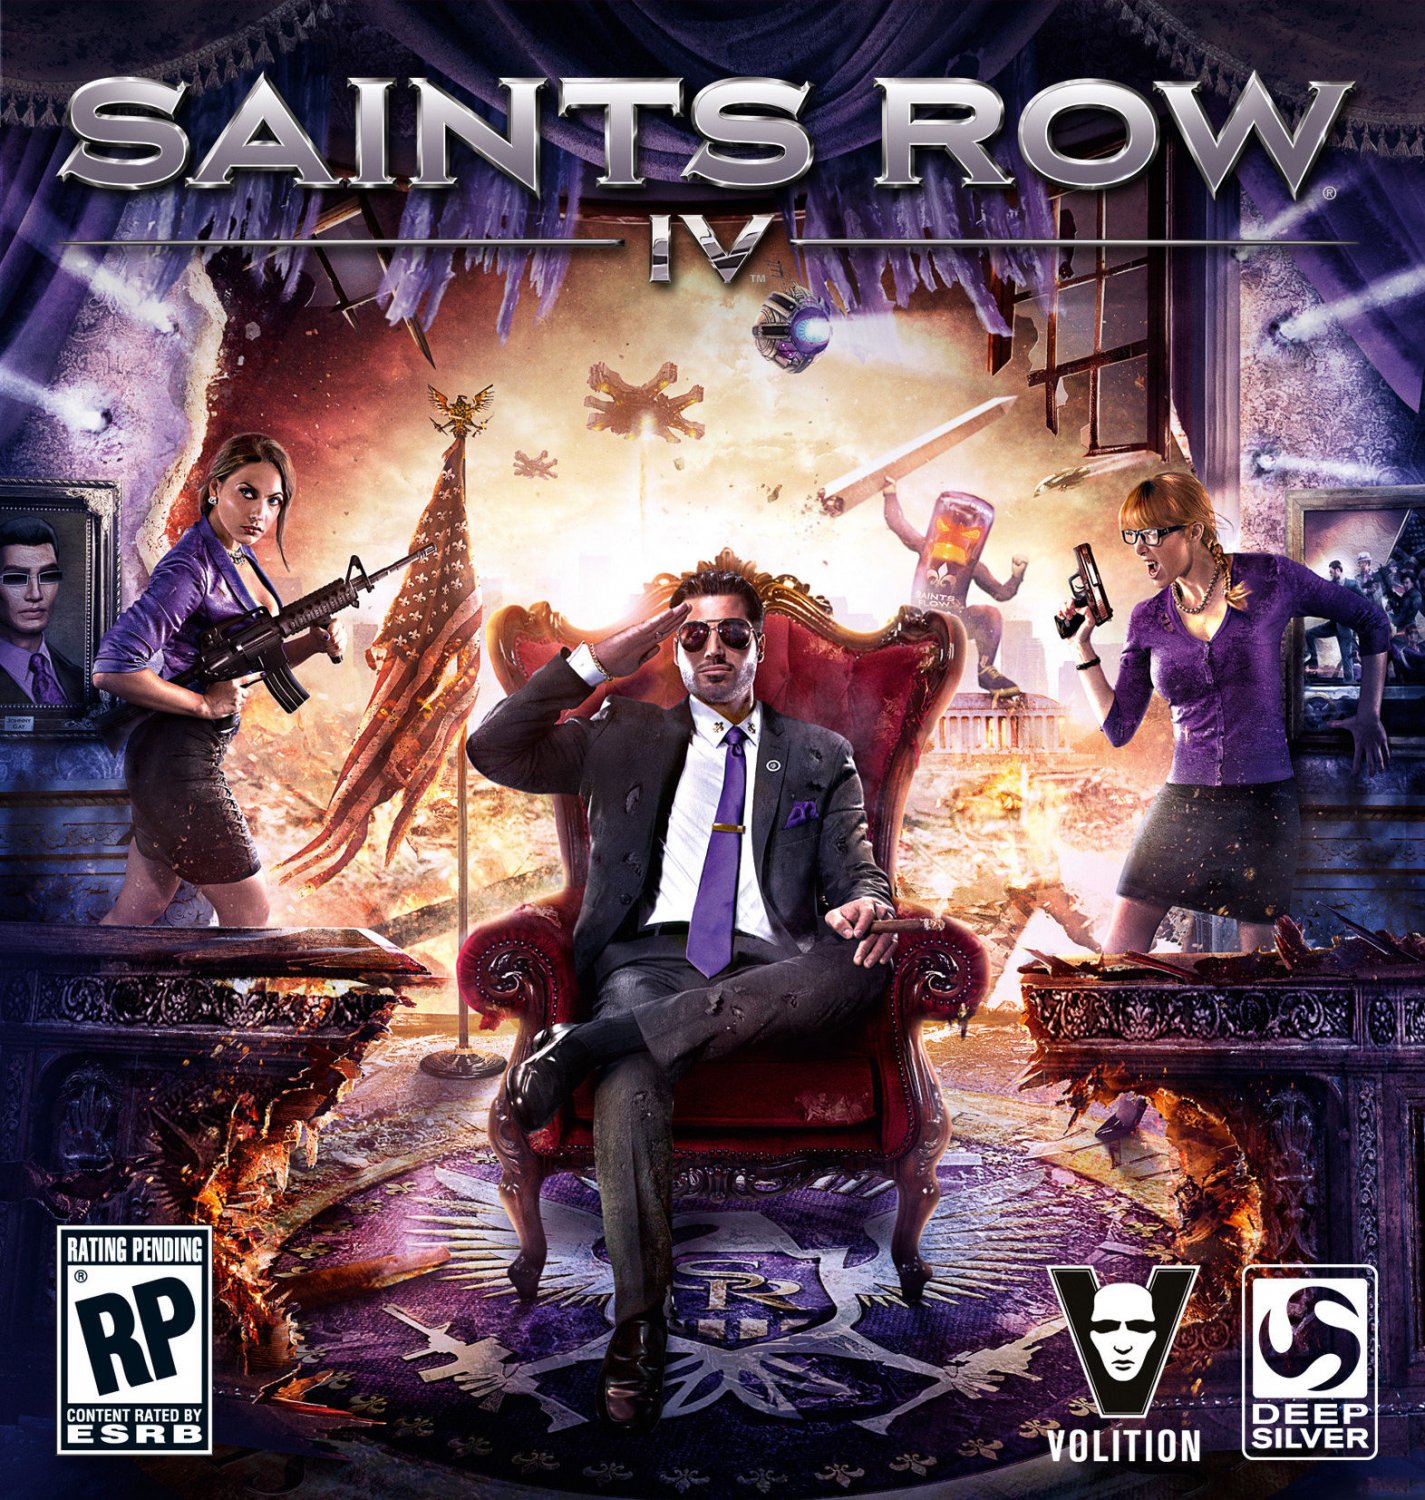 saints row 4 pc download free full game